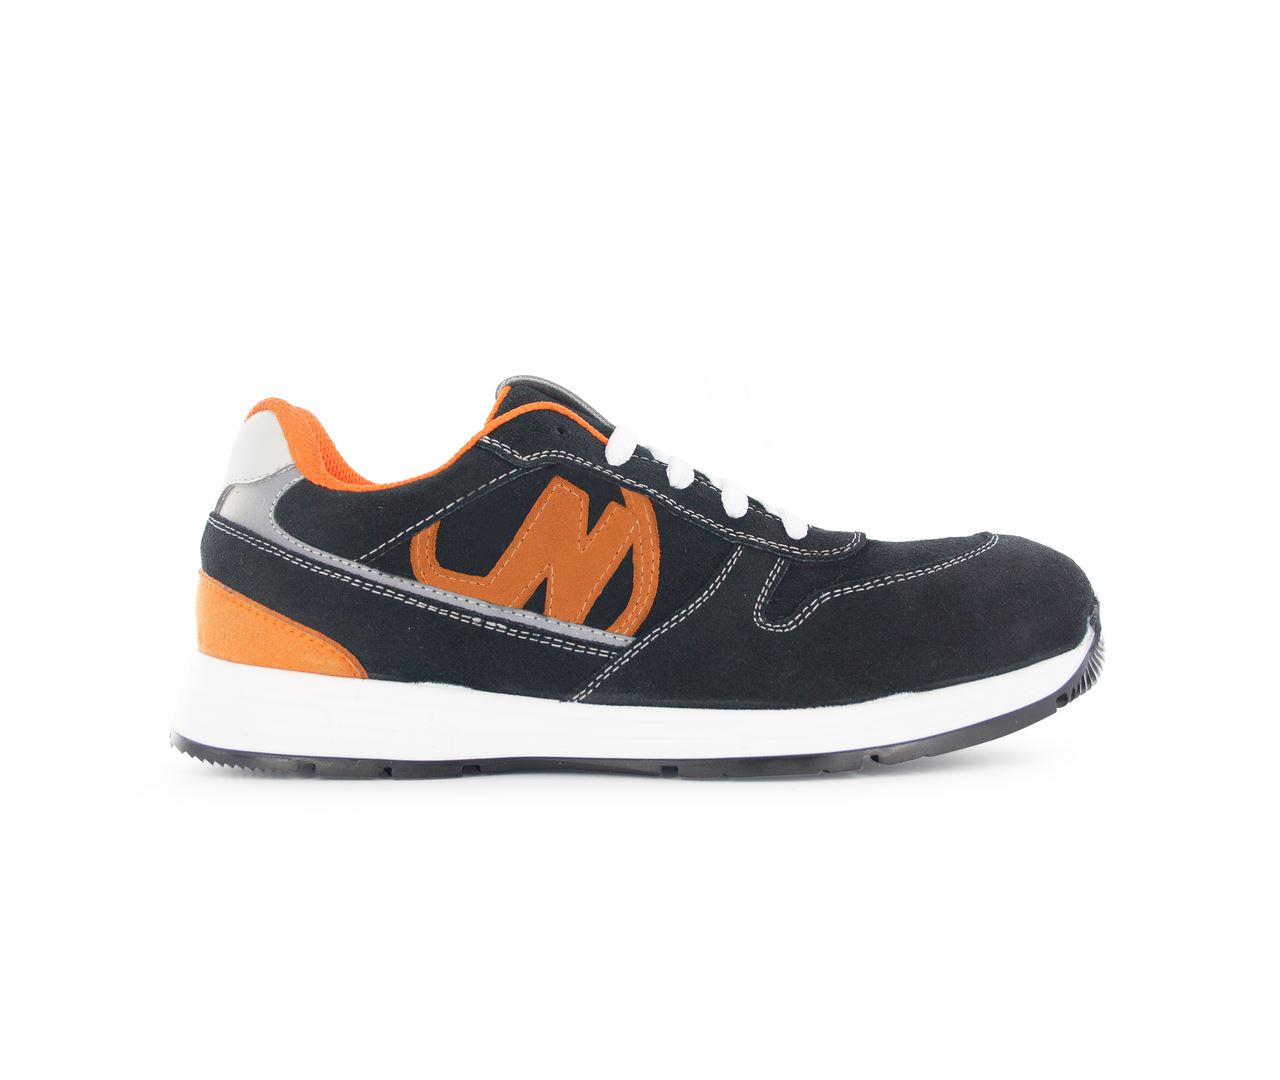 Chaussure de sécurité noir/orange Run Soft T.39 - Nord'Ways - RUN000339000NOOR